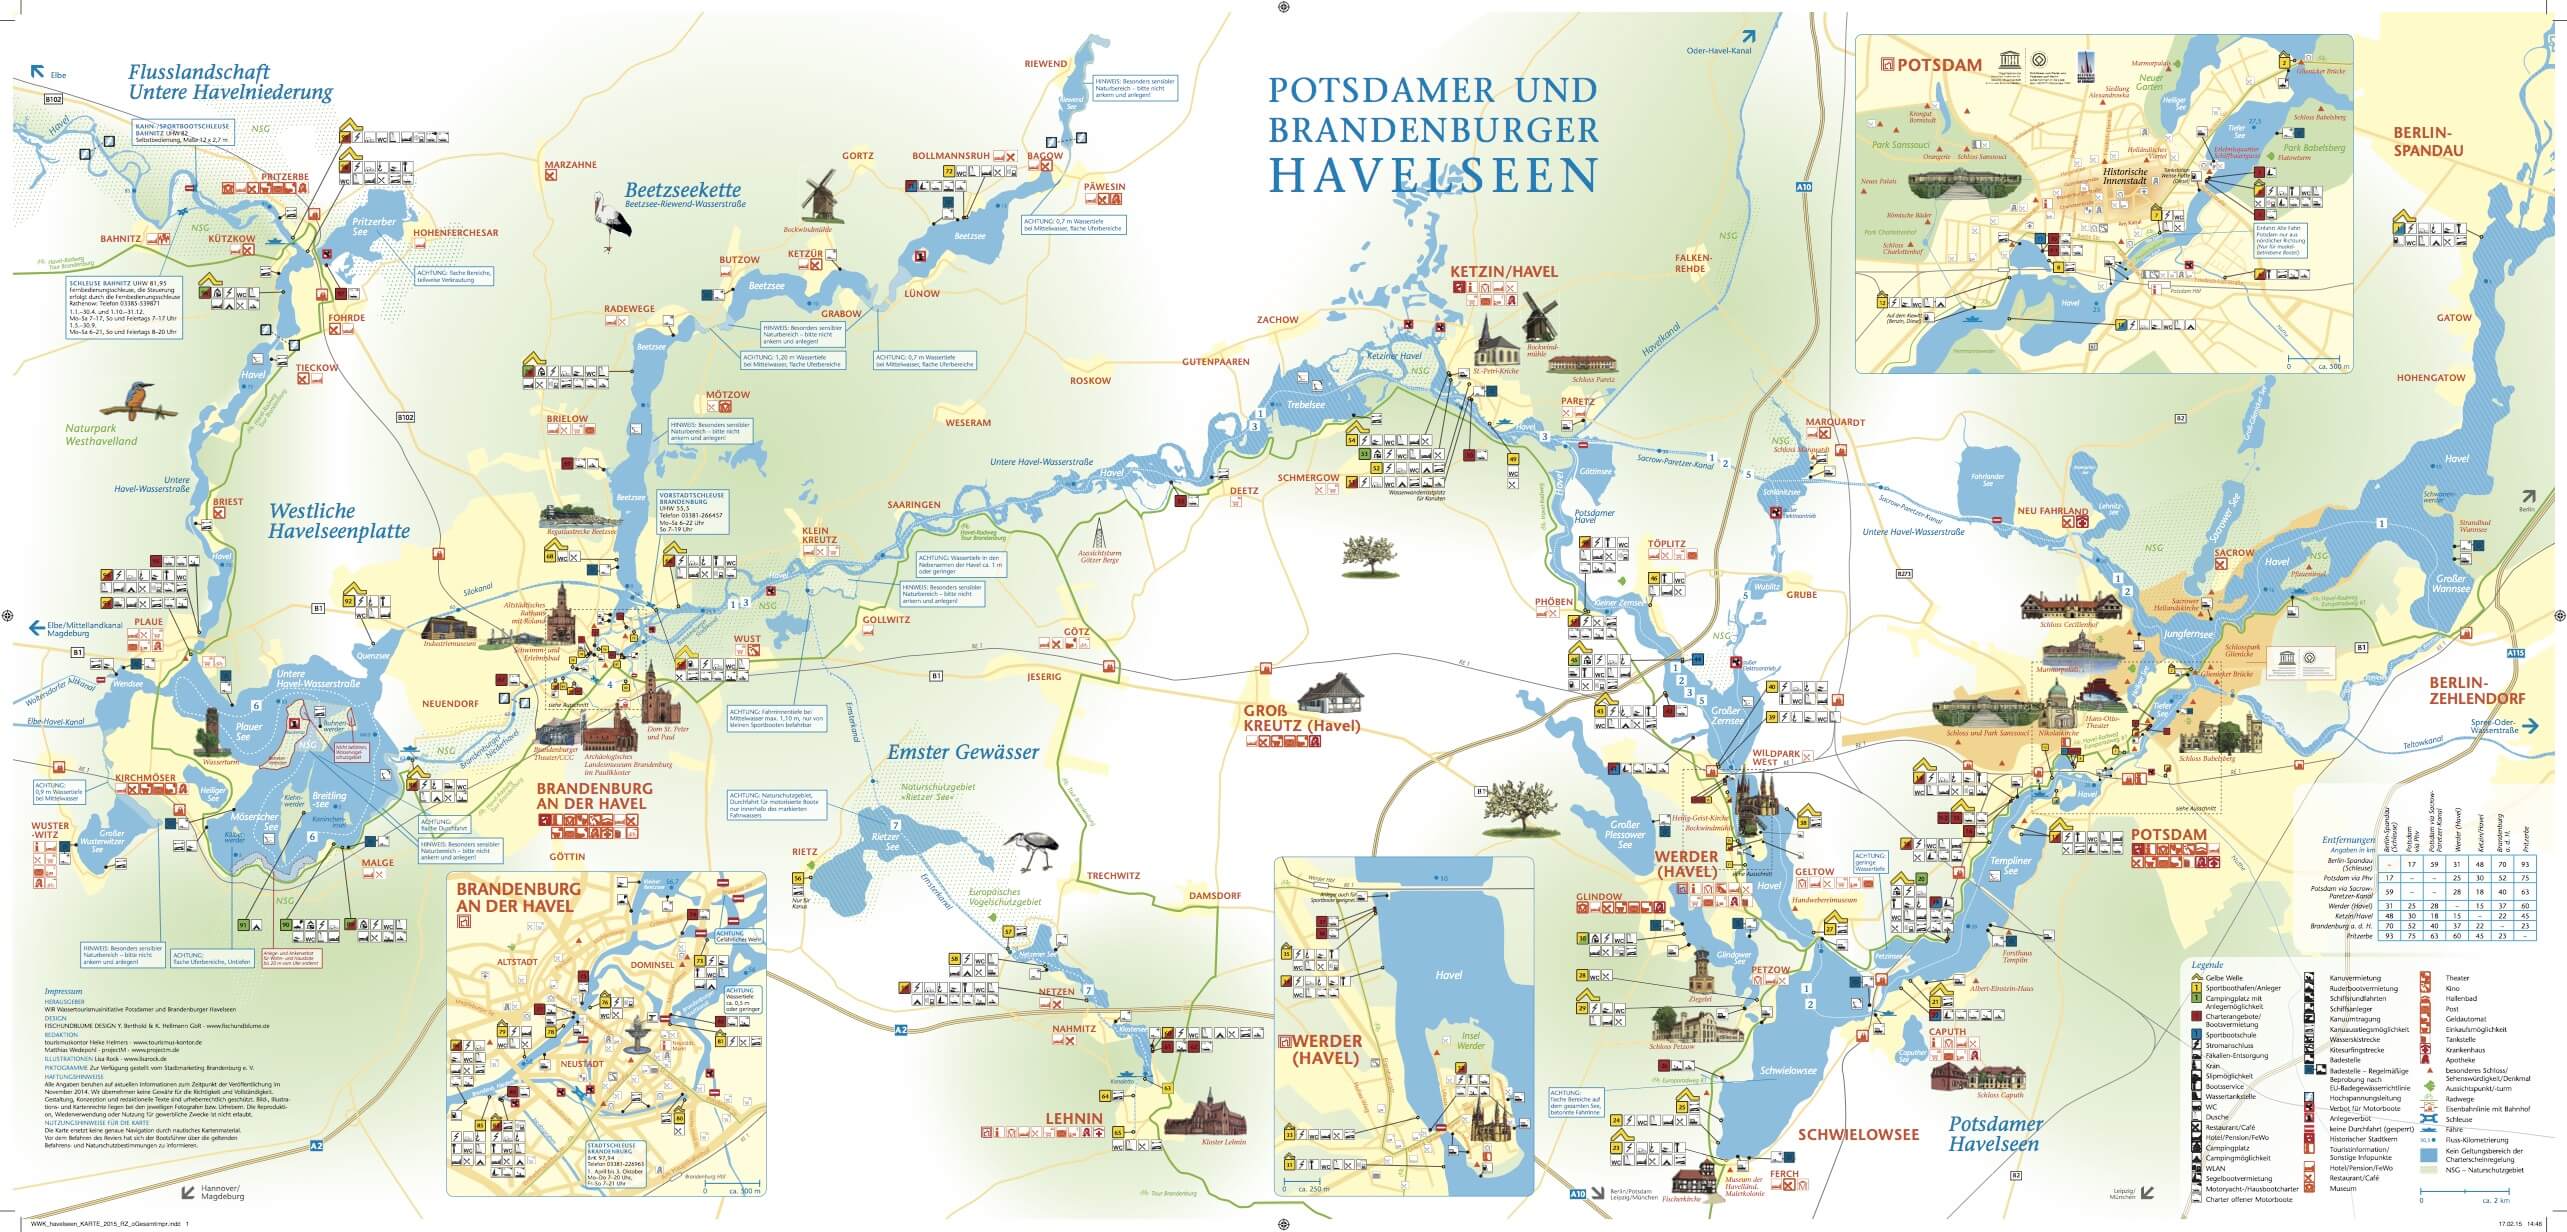 Download the map of Potsdam and Brandenburg Havel waterways here